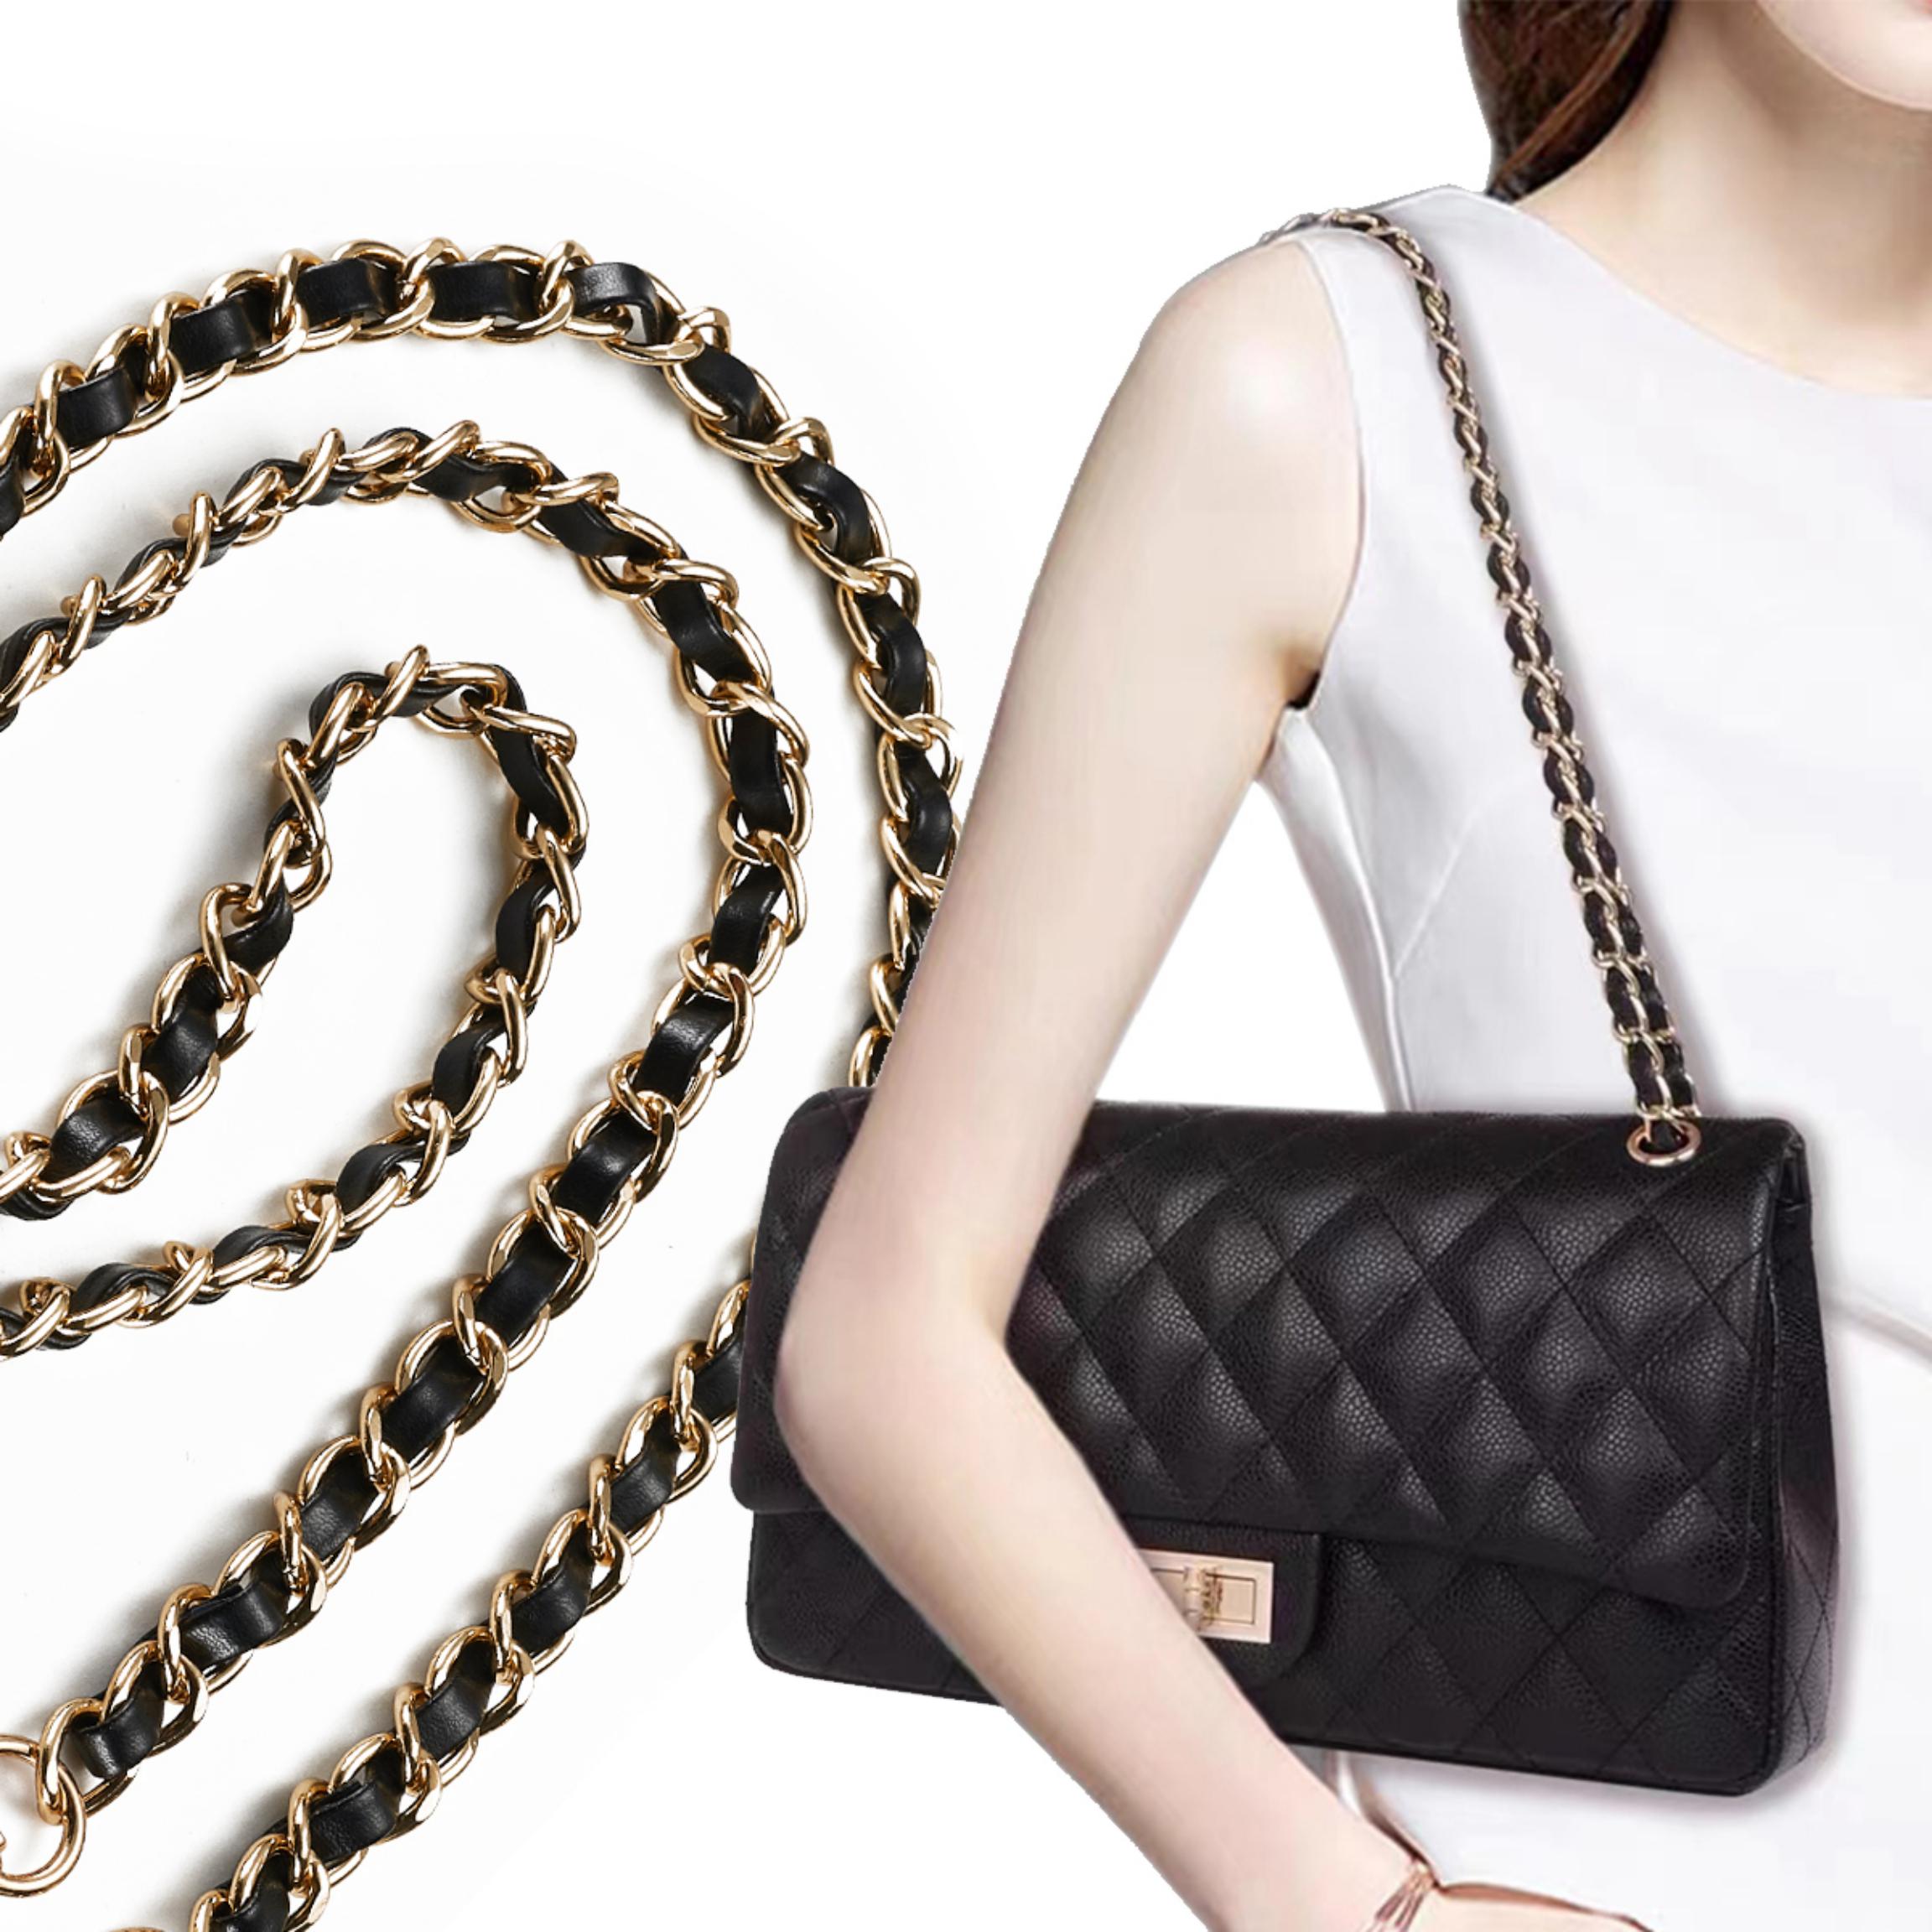 Black Handbag With Gold Chain Straps 559387 Thml - Buy Black